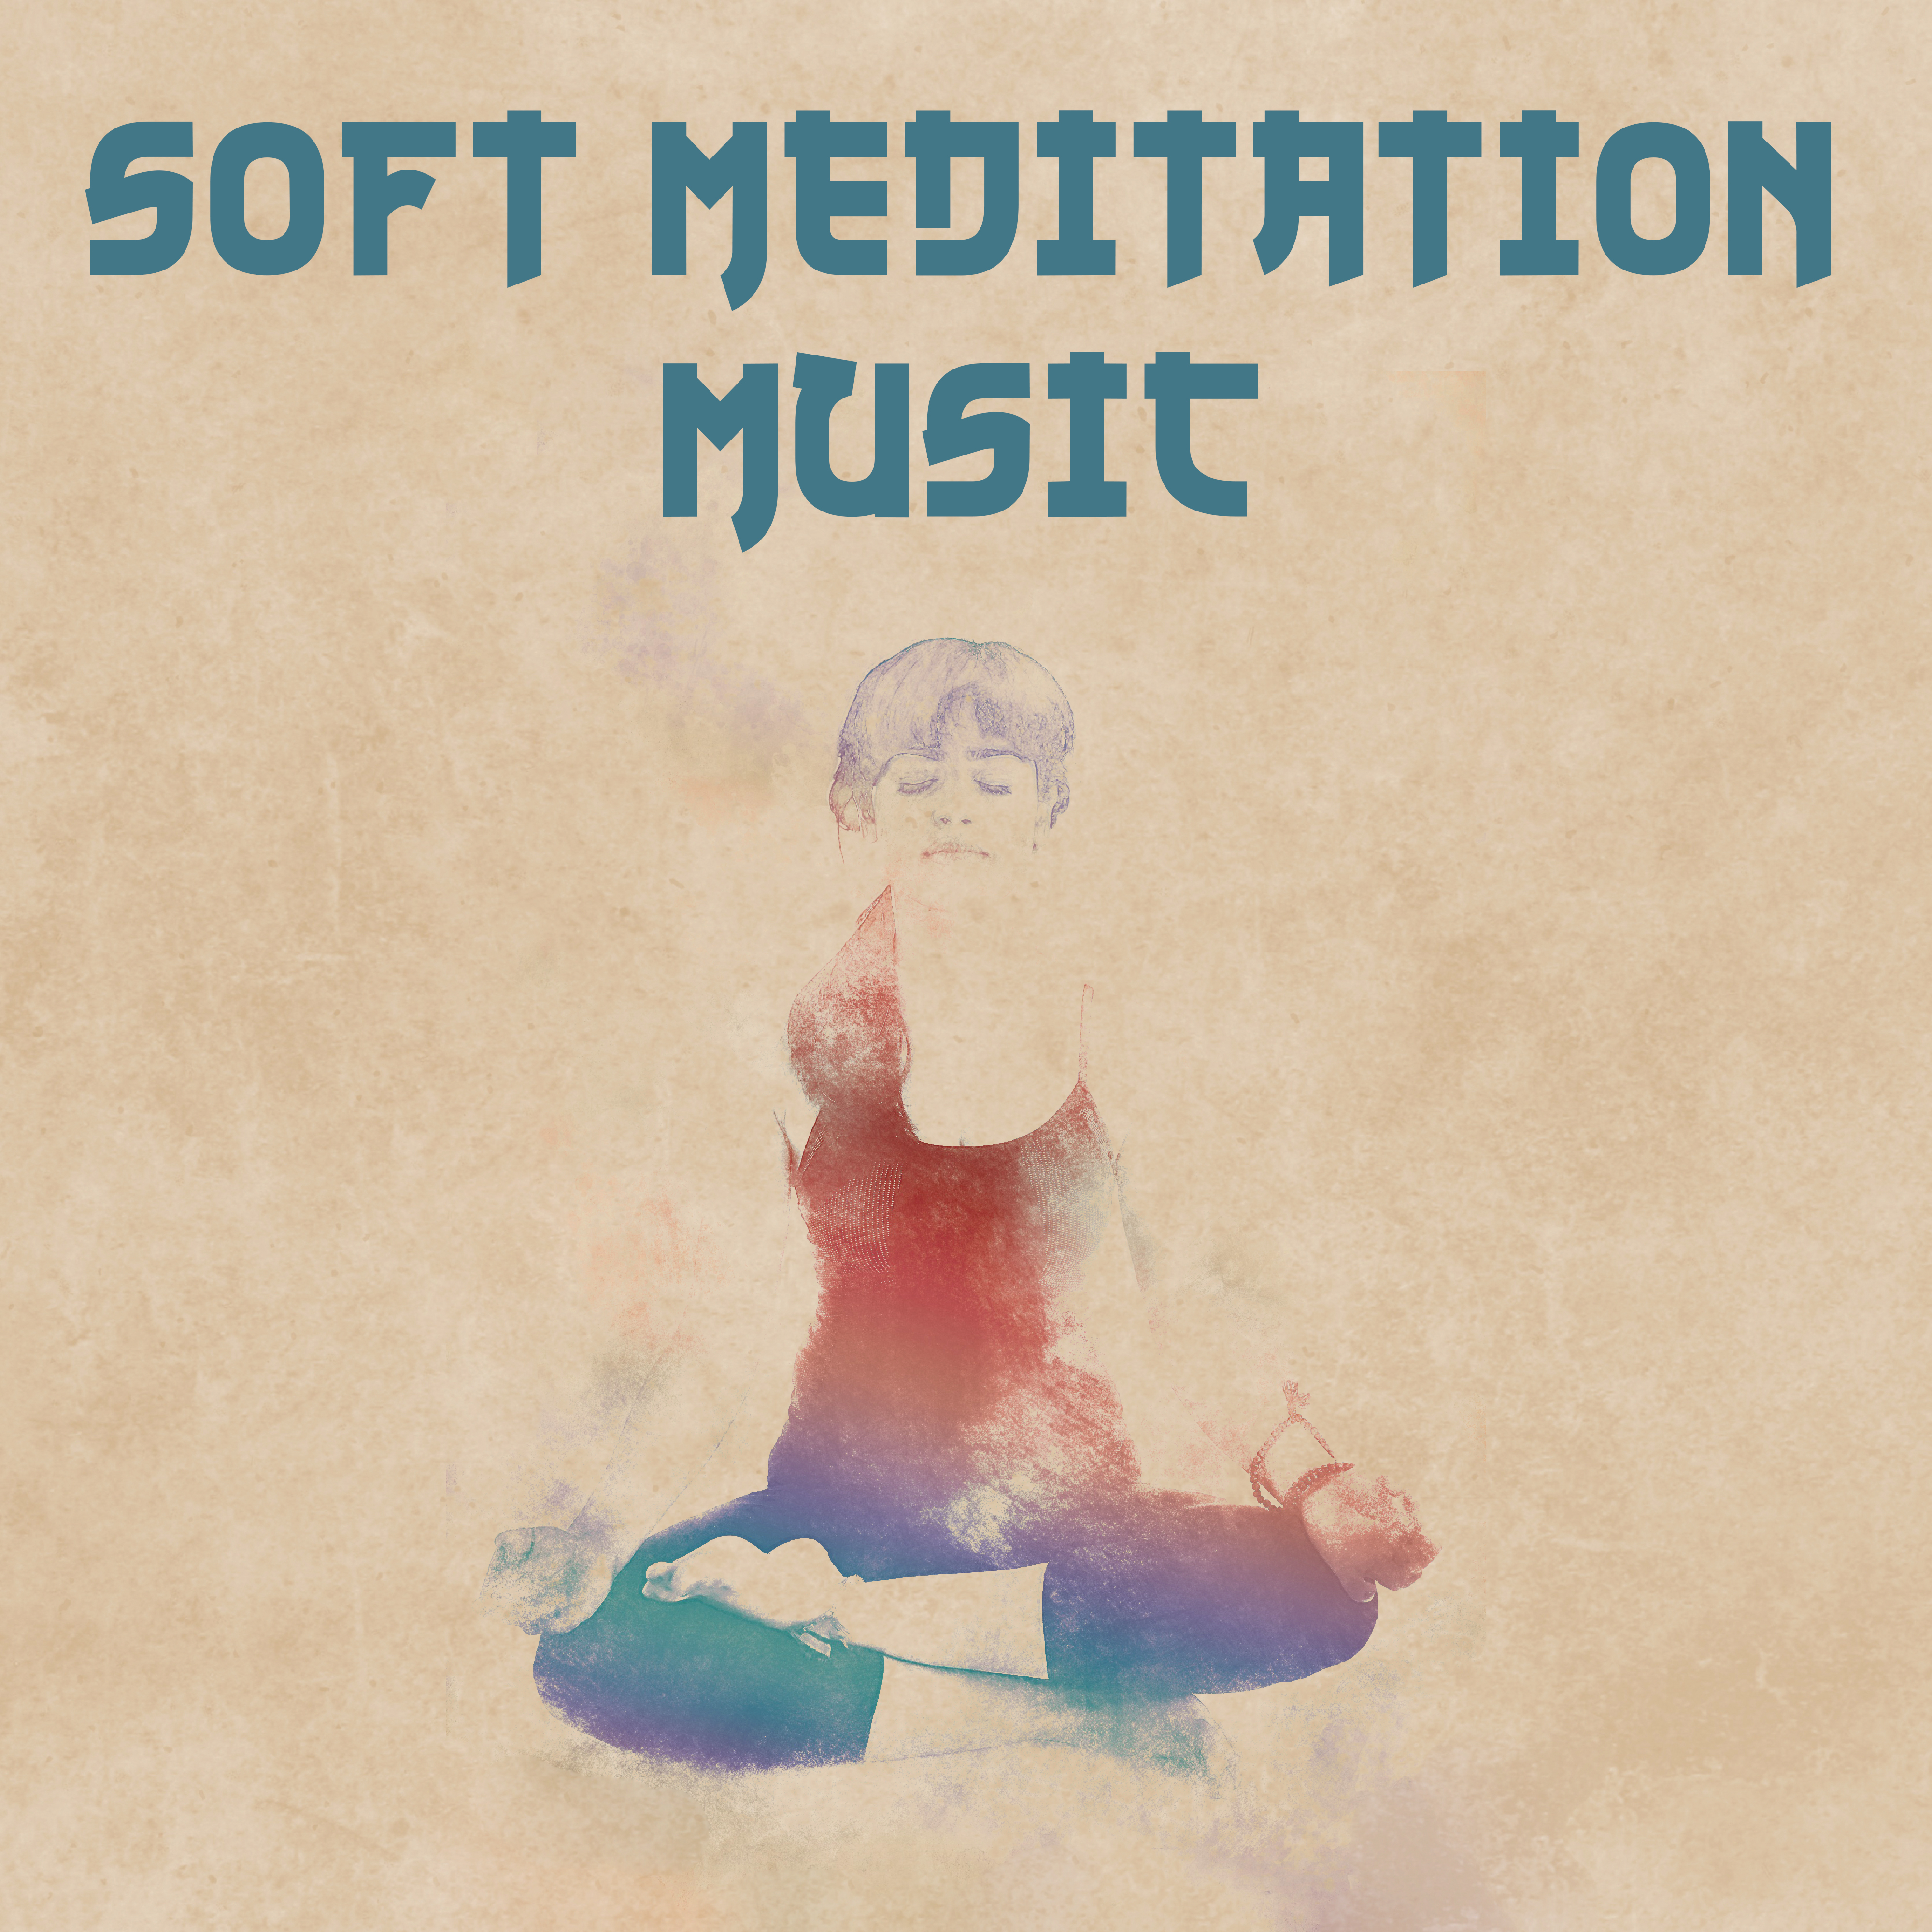 Soft Meditation Music – Calm Waves to Meditate, Relaxation Sounds, Buddha Lounge, Peaceful Music